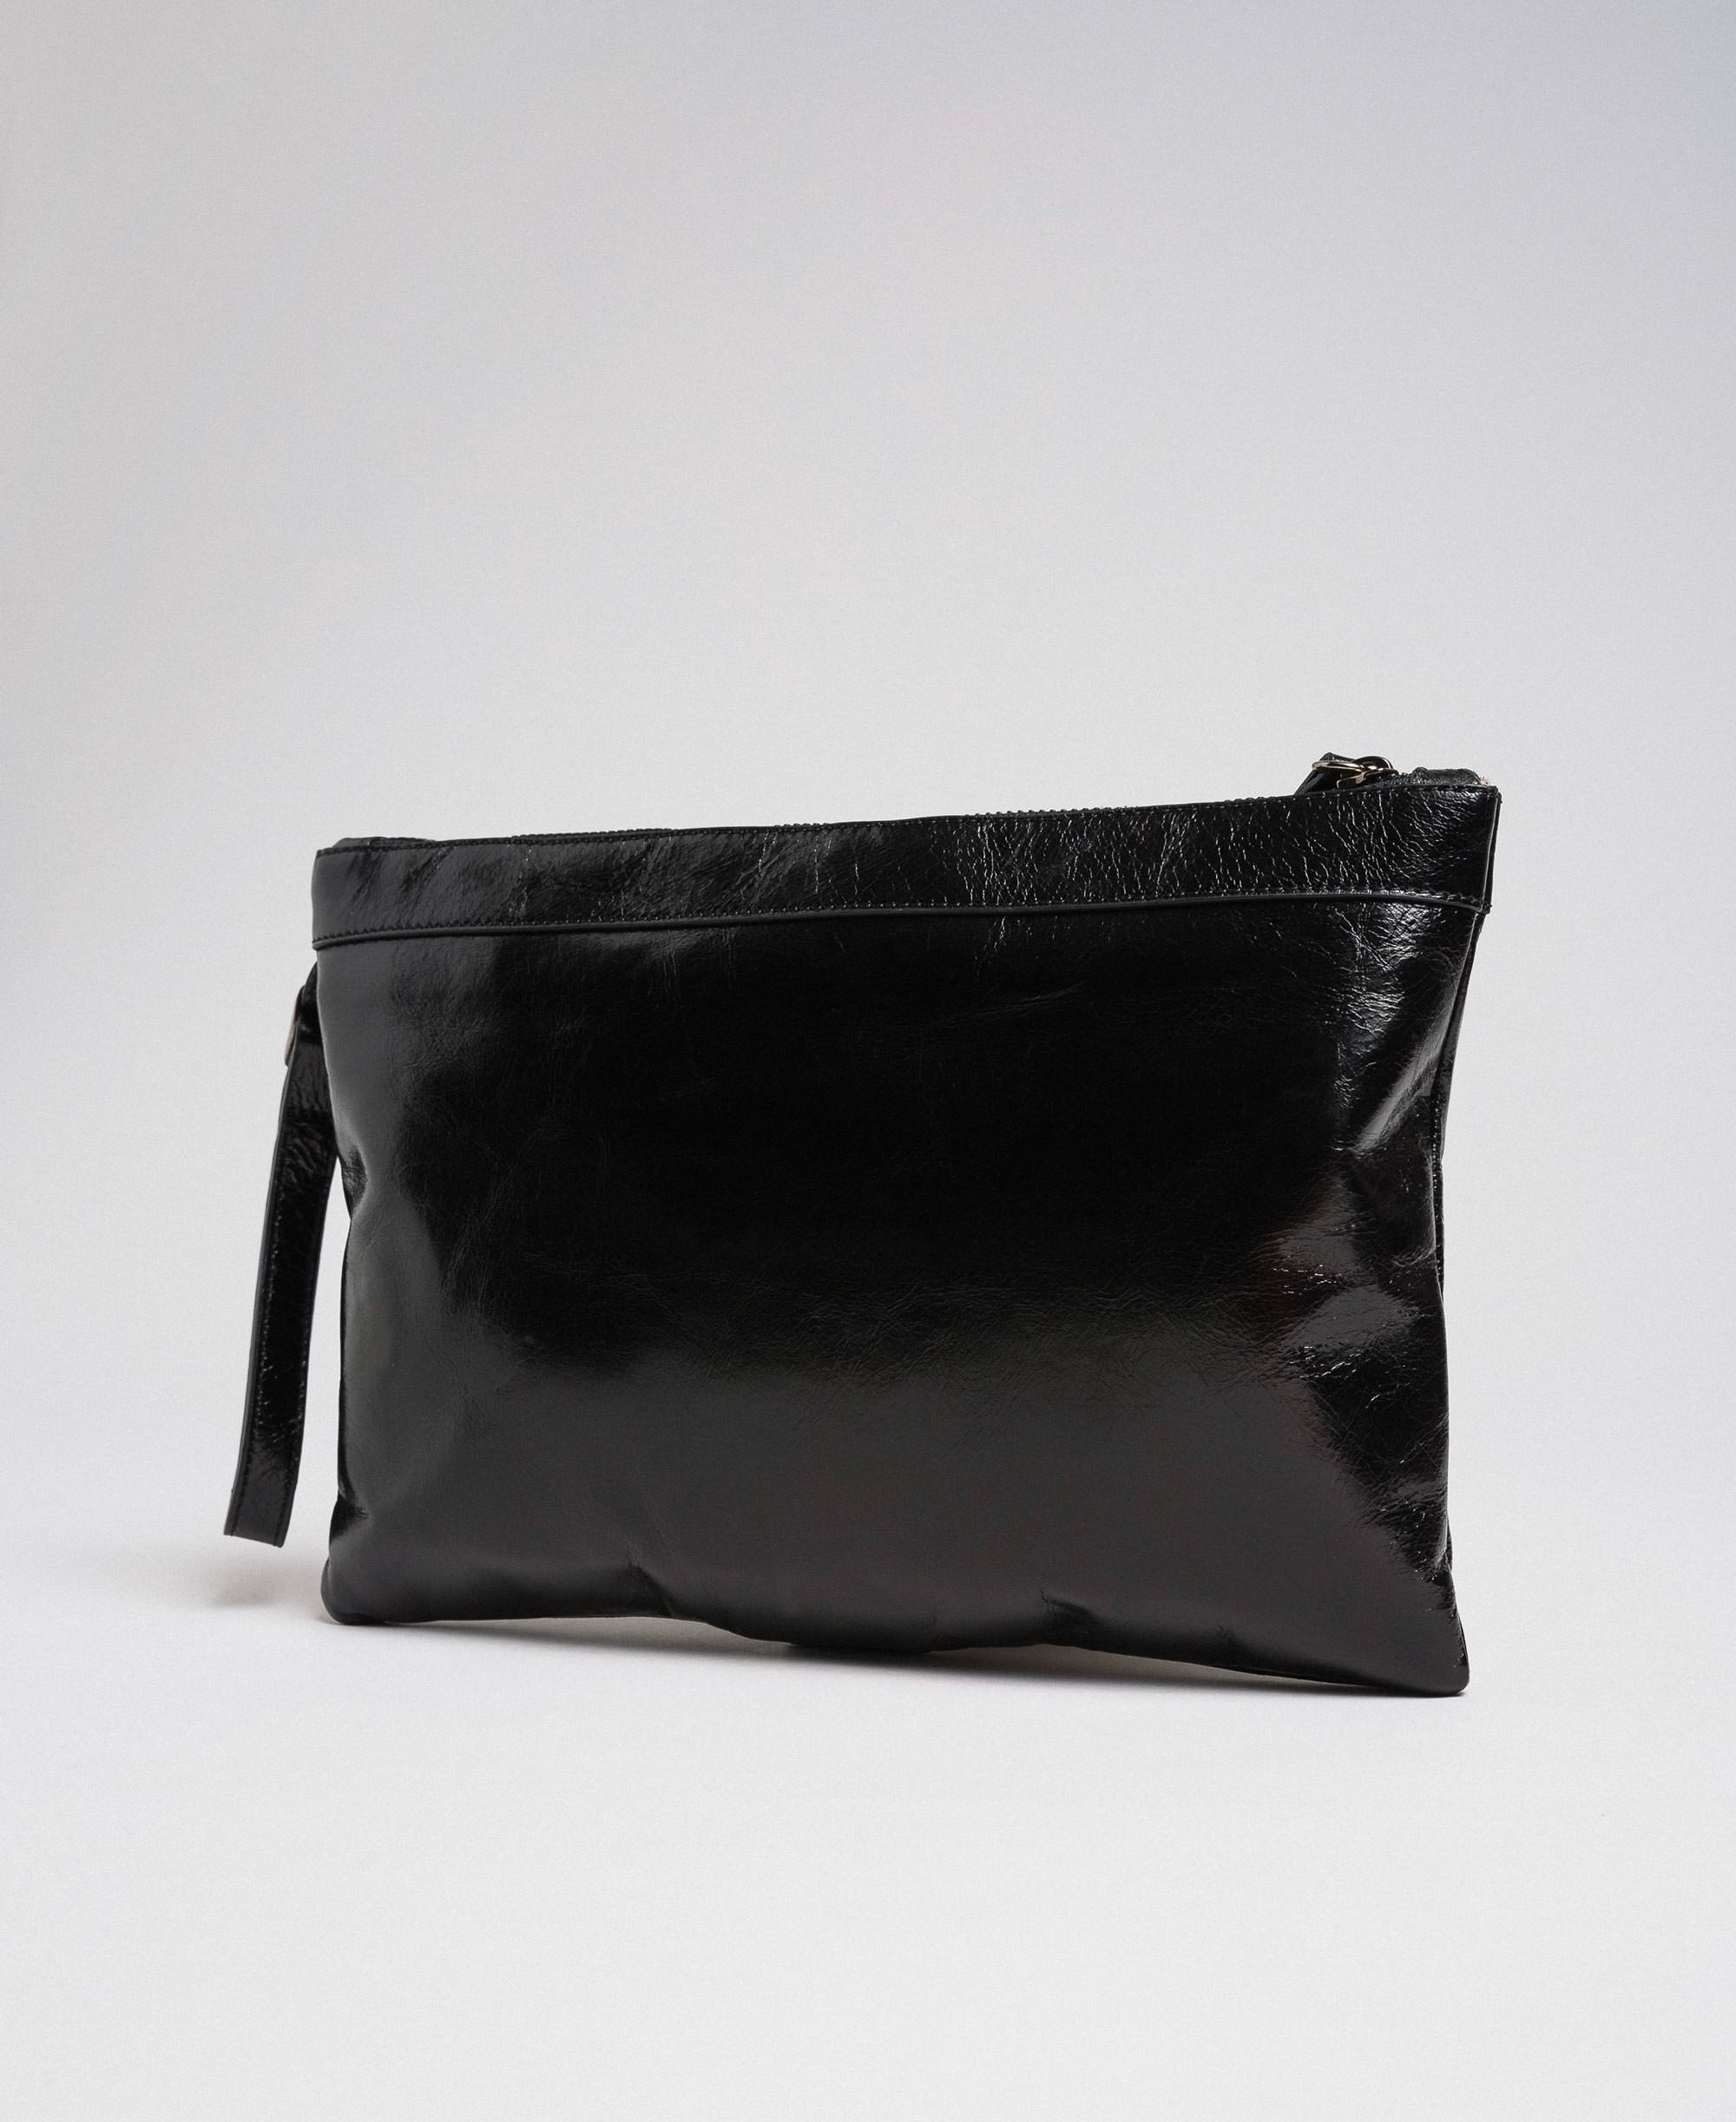 black clutch bag with wrist strap